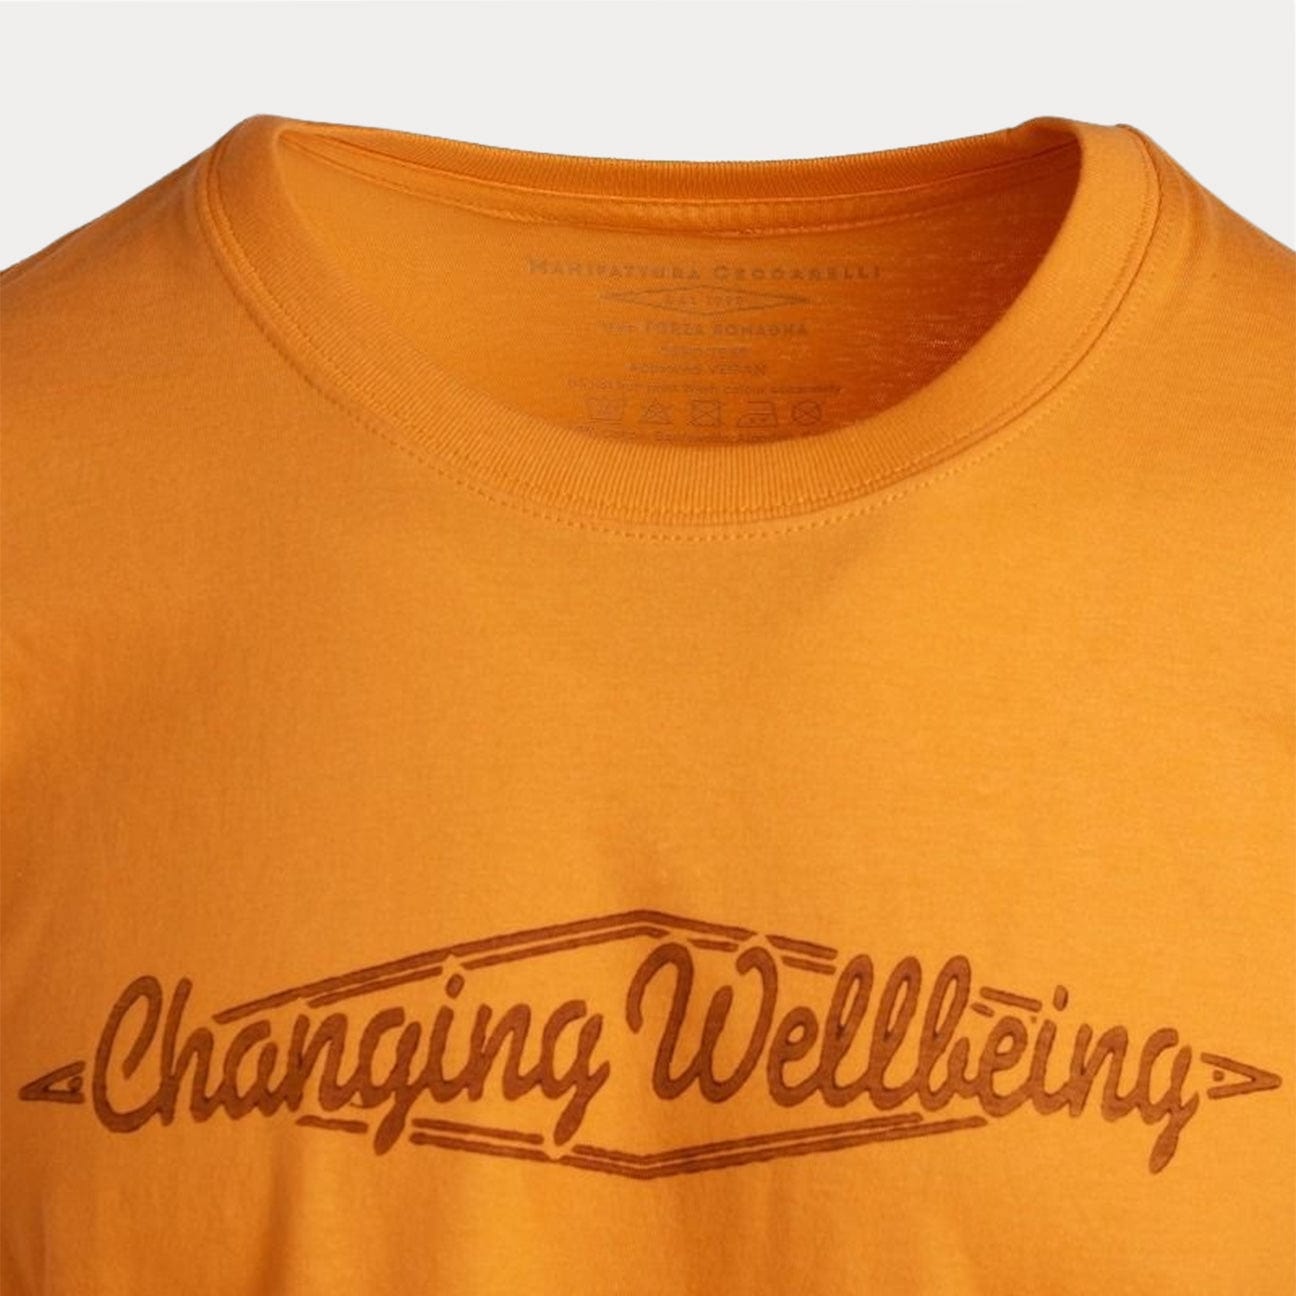 MANIFATTURA CECCARELLI T-Shirt Changing Wellbeing Arancio